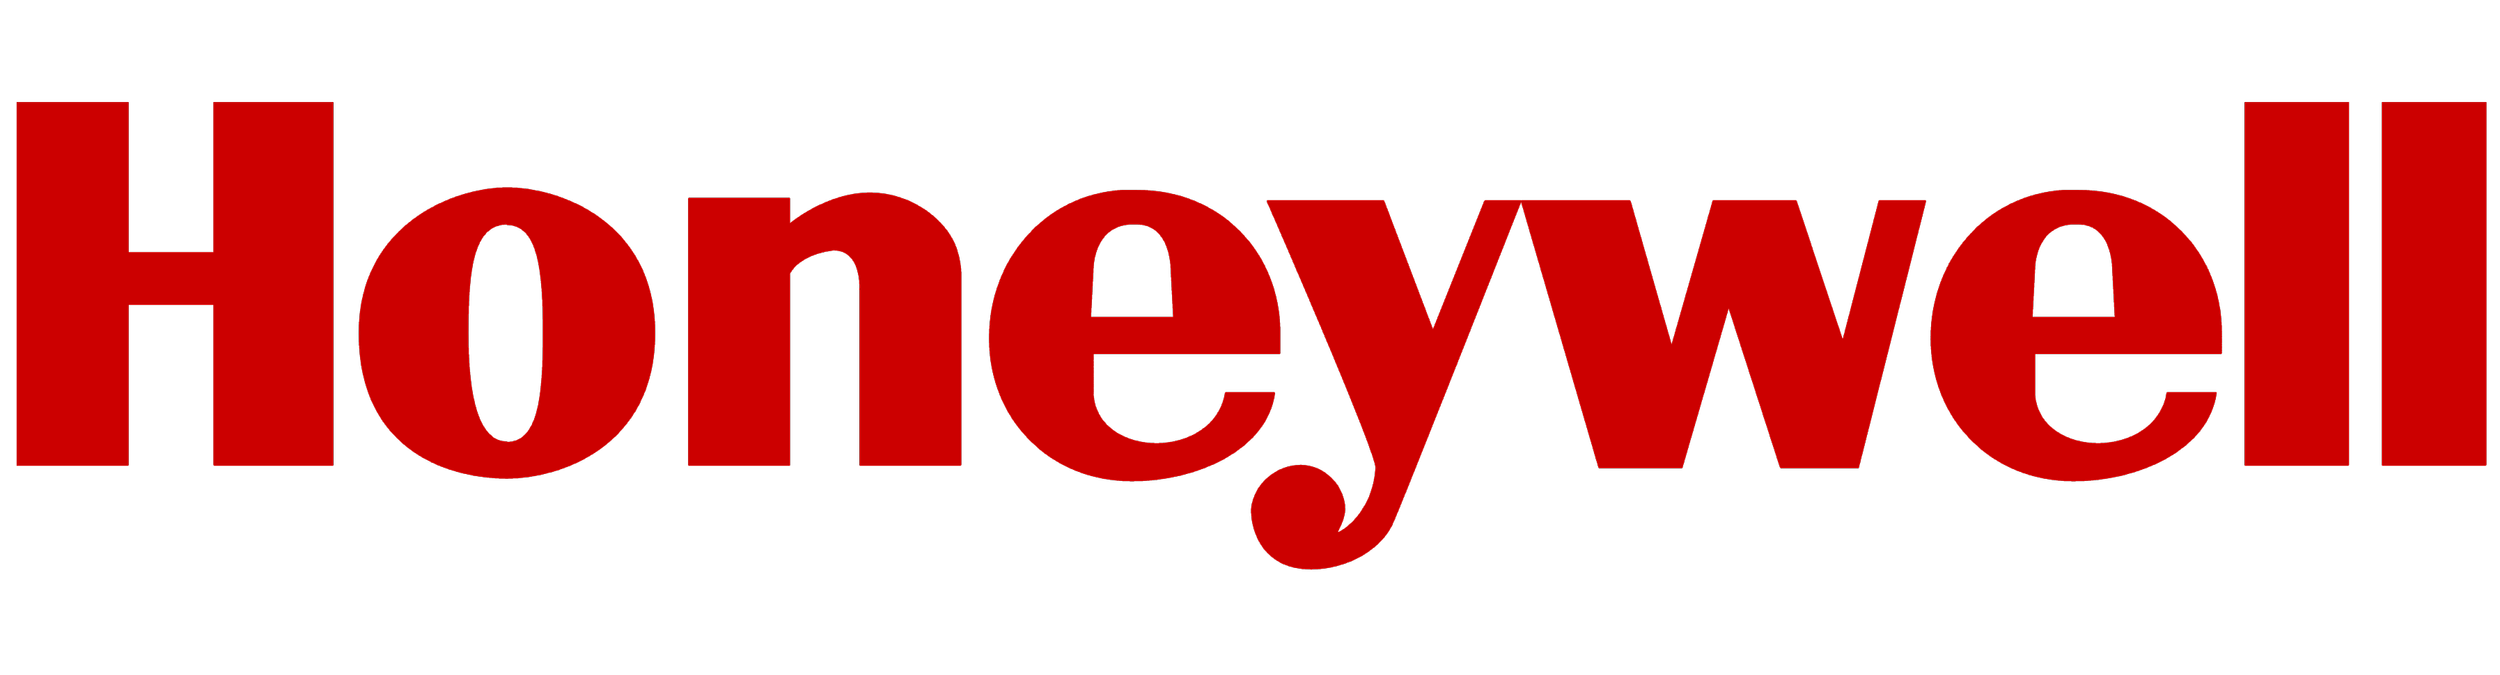 Honeywell_logo (1).png